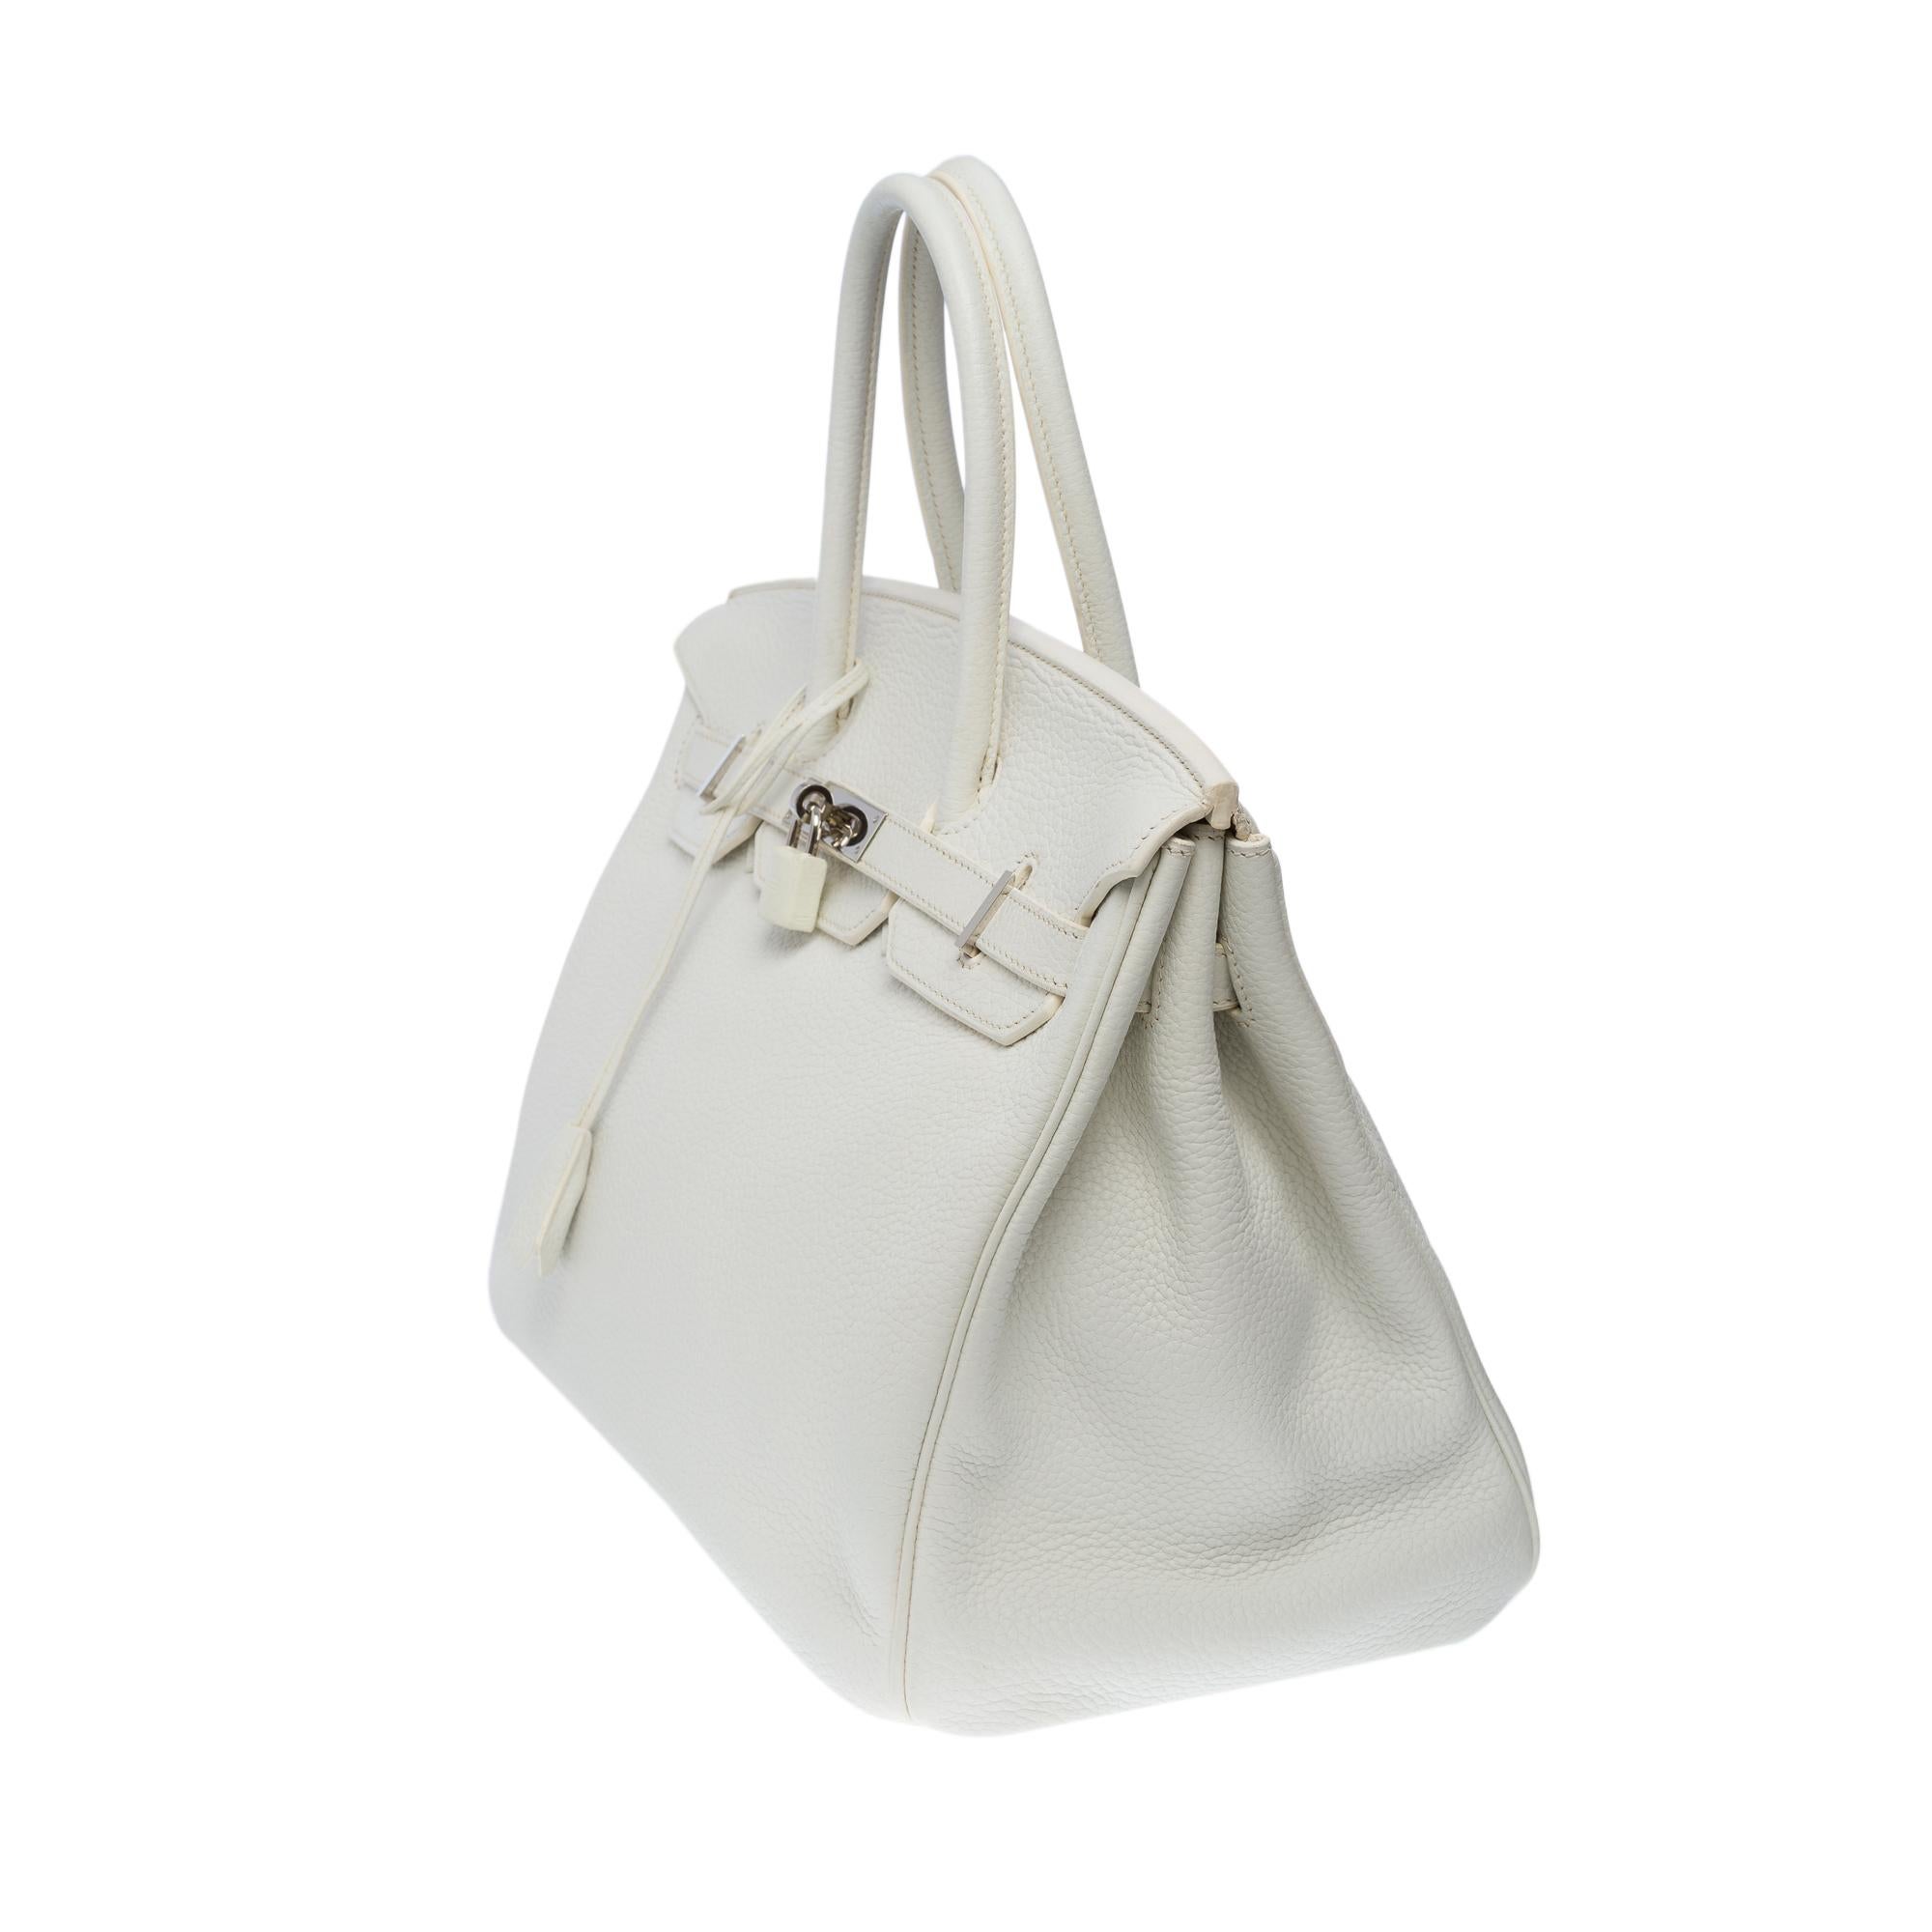 Gray Stunning Hermès Birkin 35 handbag in white Togo leather, SHW